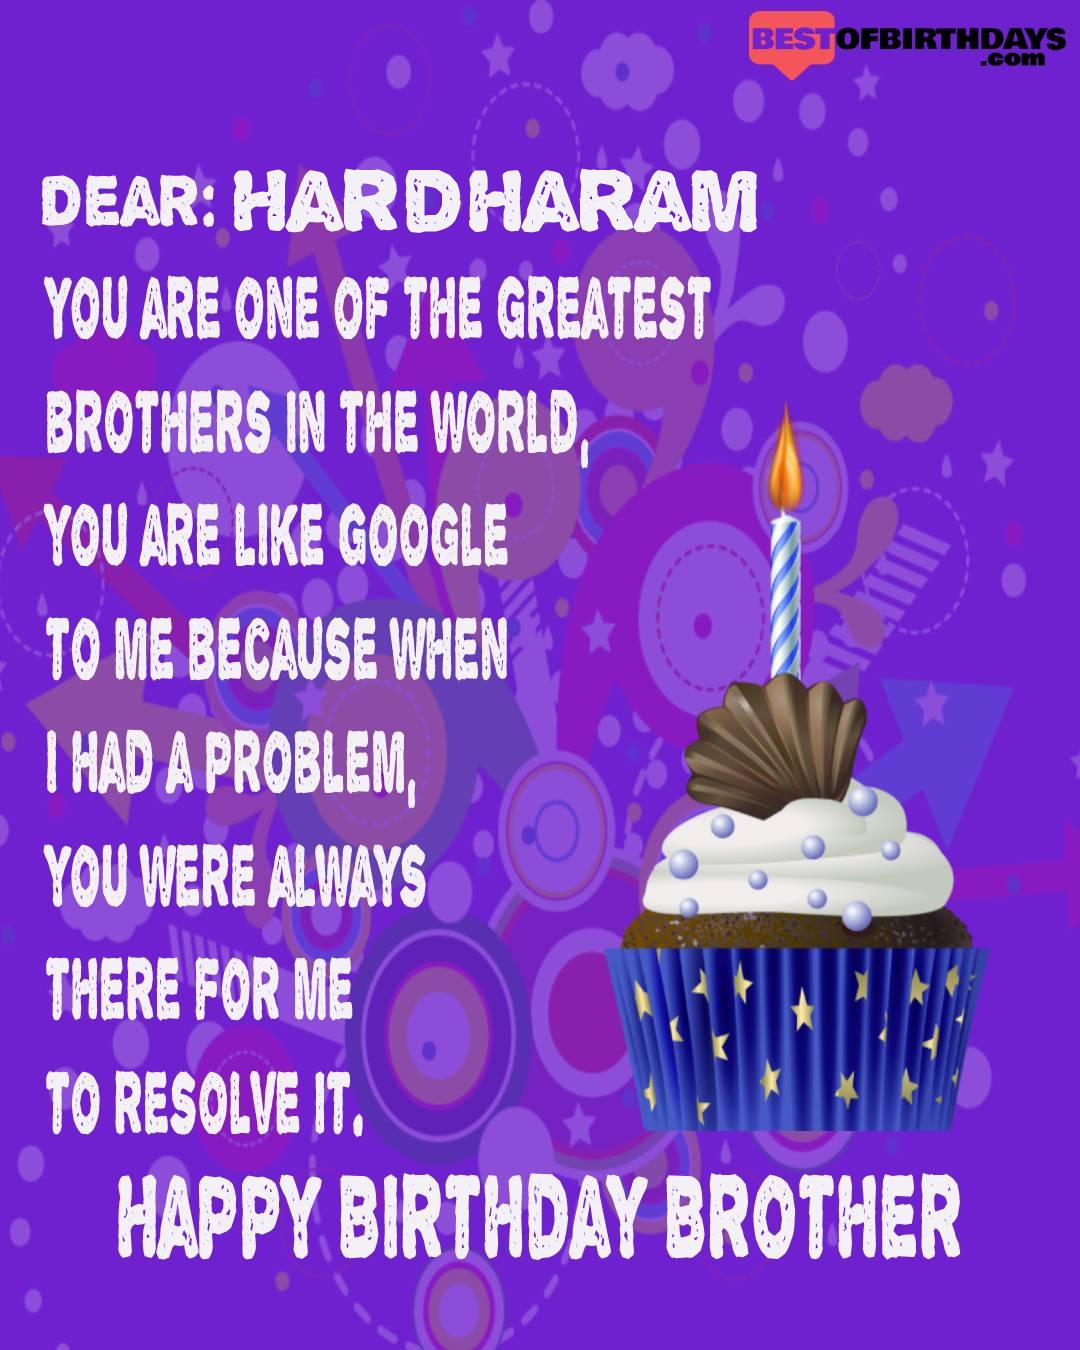 Happy birthday hardharam bhai brother bro